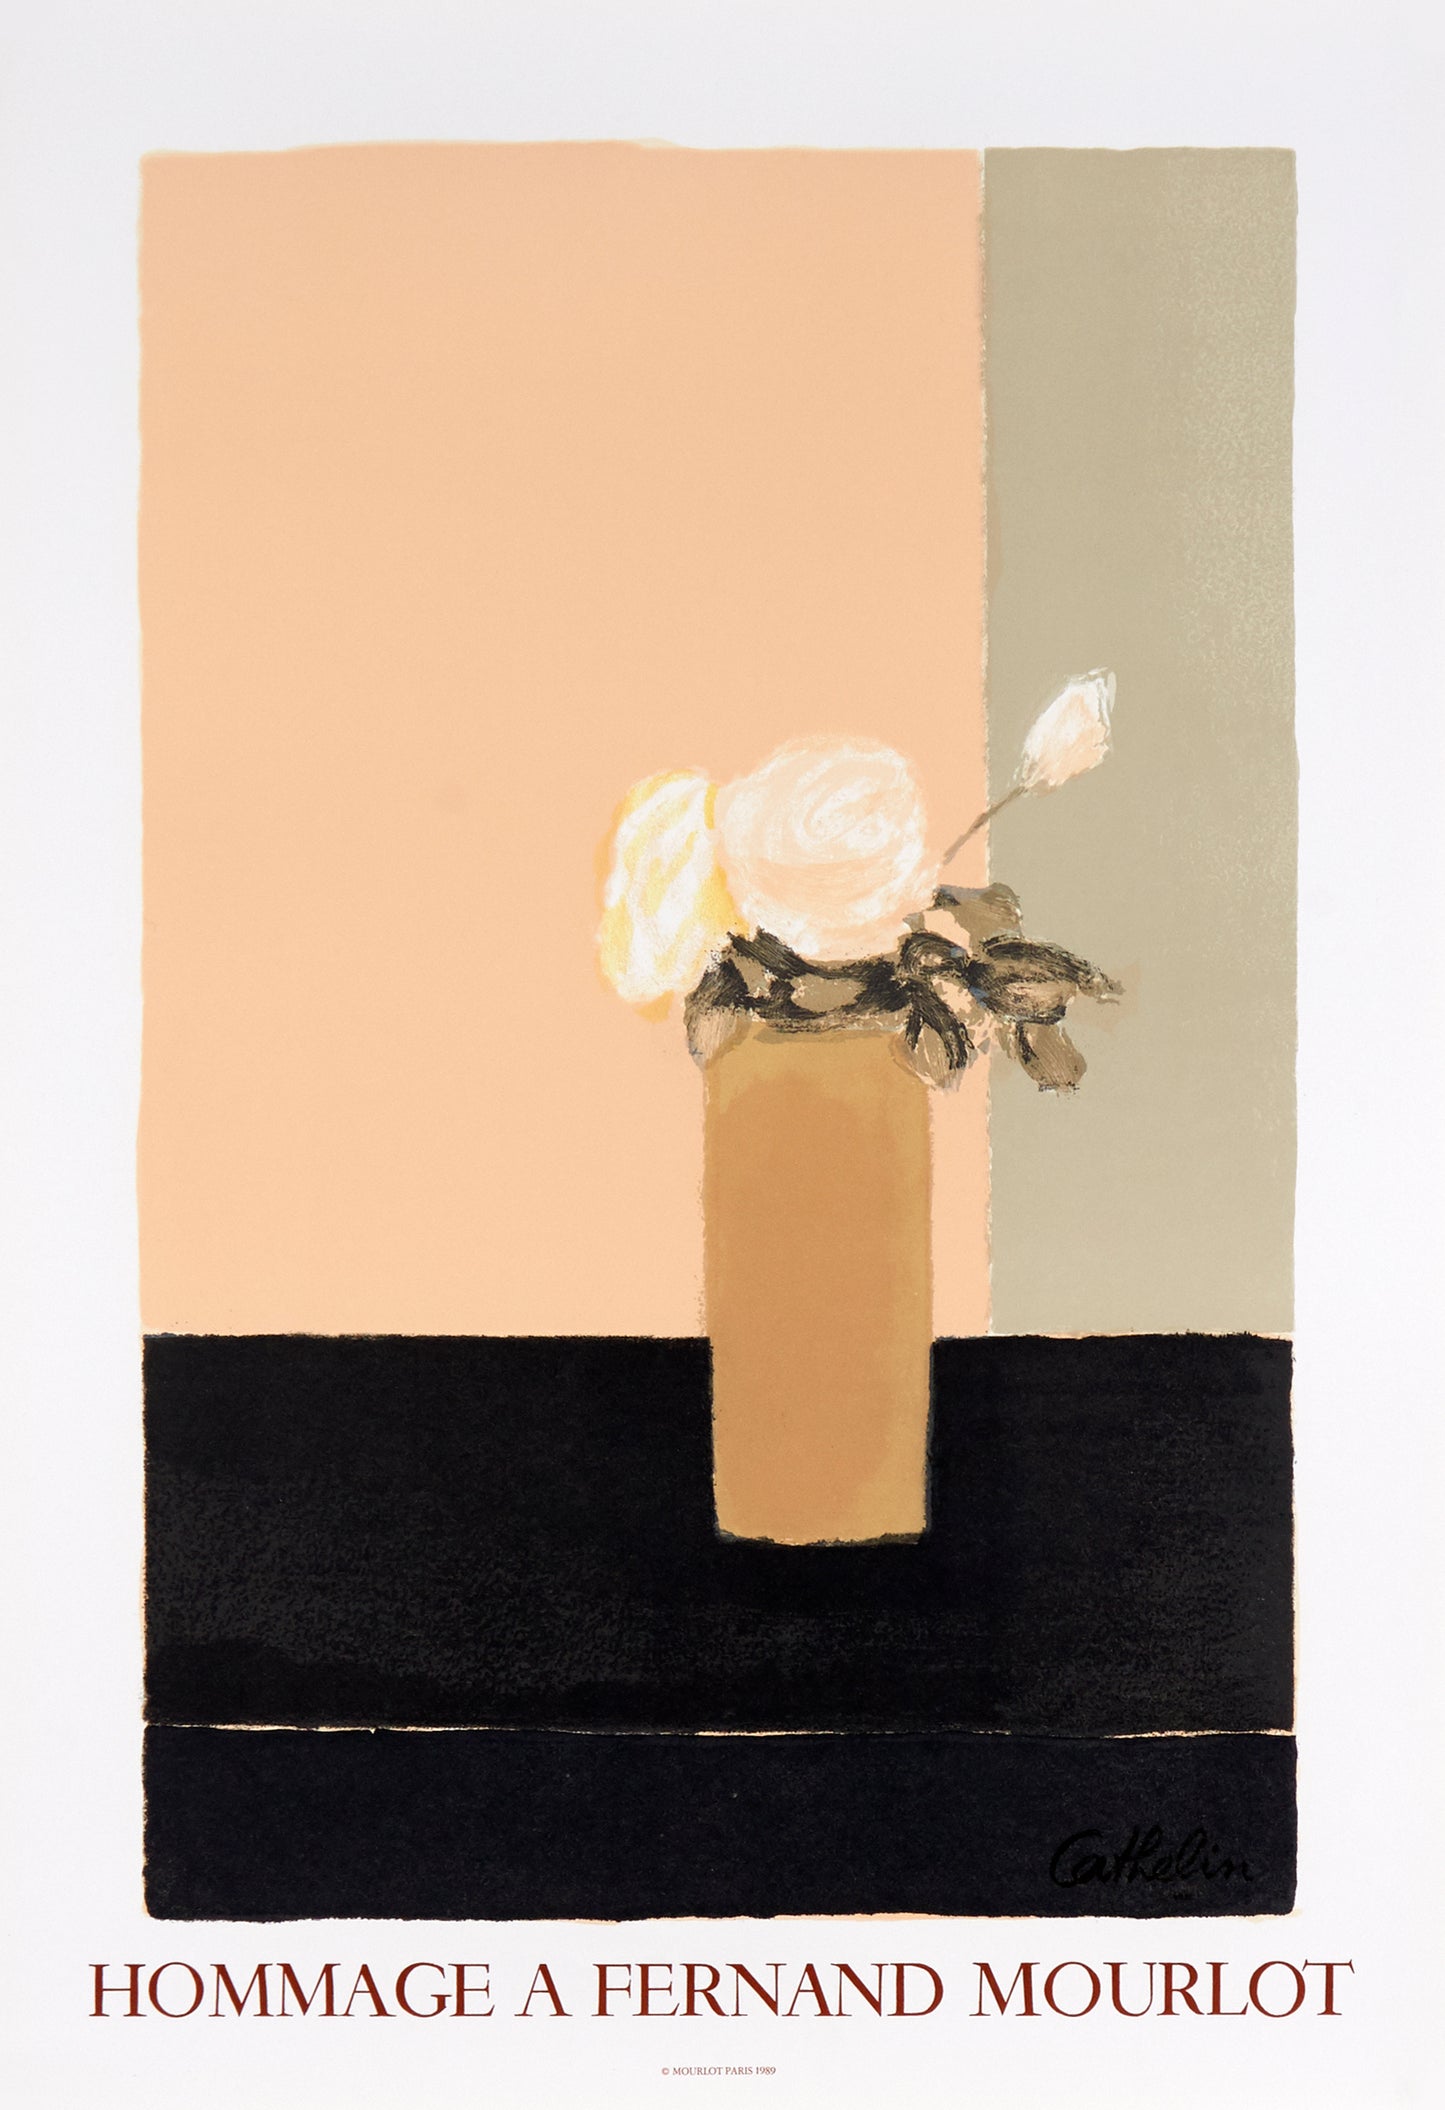 Roses Blanches - Hommage a Fernand Mourlot by Bernard Cathelin, 1989 - Mourlot Editions - Fine_Art - Poster - Lithograph - Wall Art - Vintage - Prints - Original